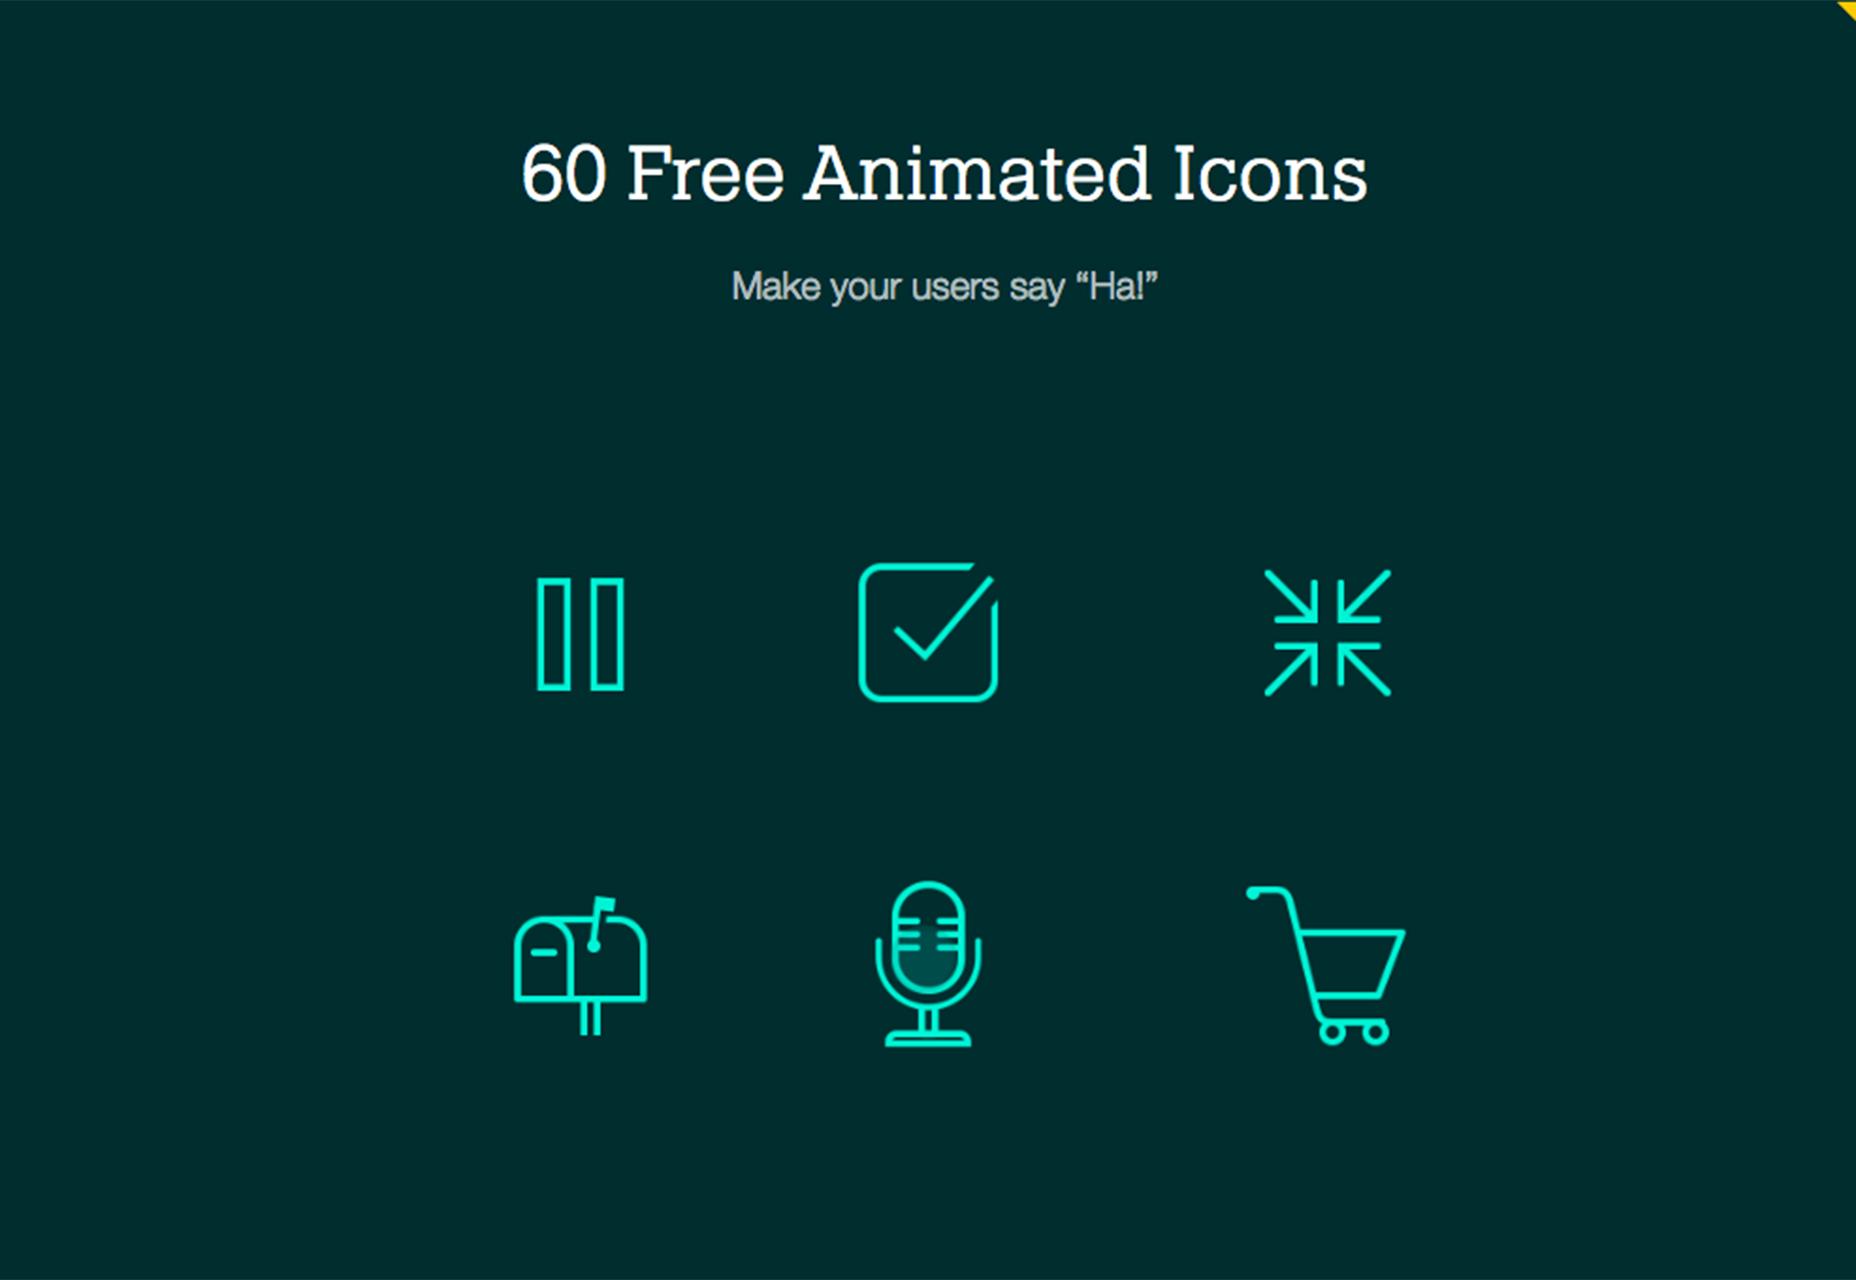 Free Download: 60 Animated Icons | Webdesigner Depot